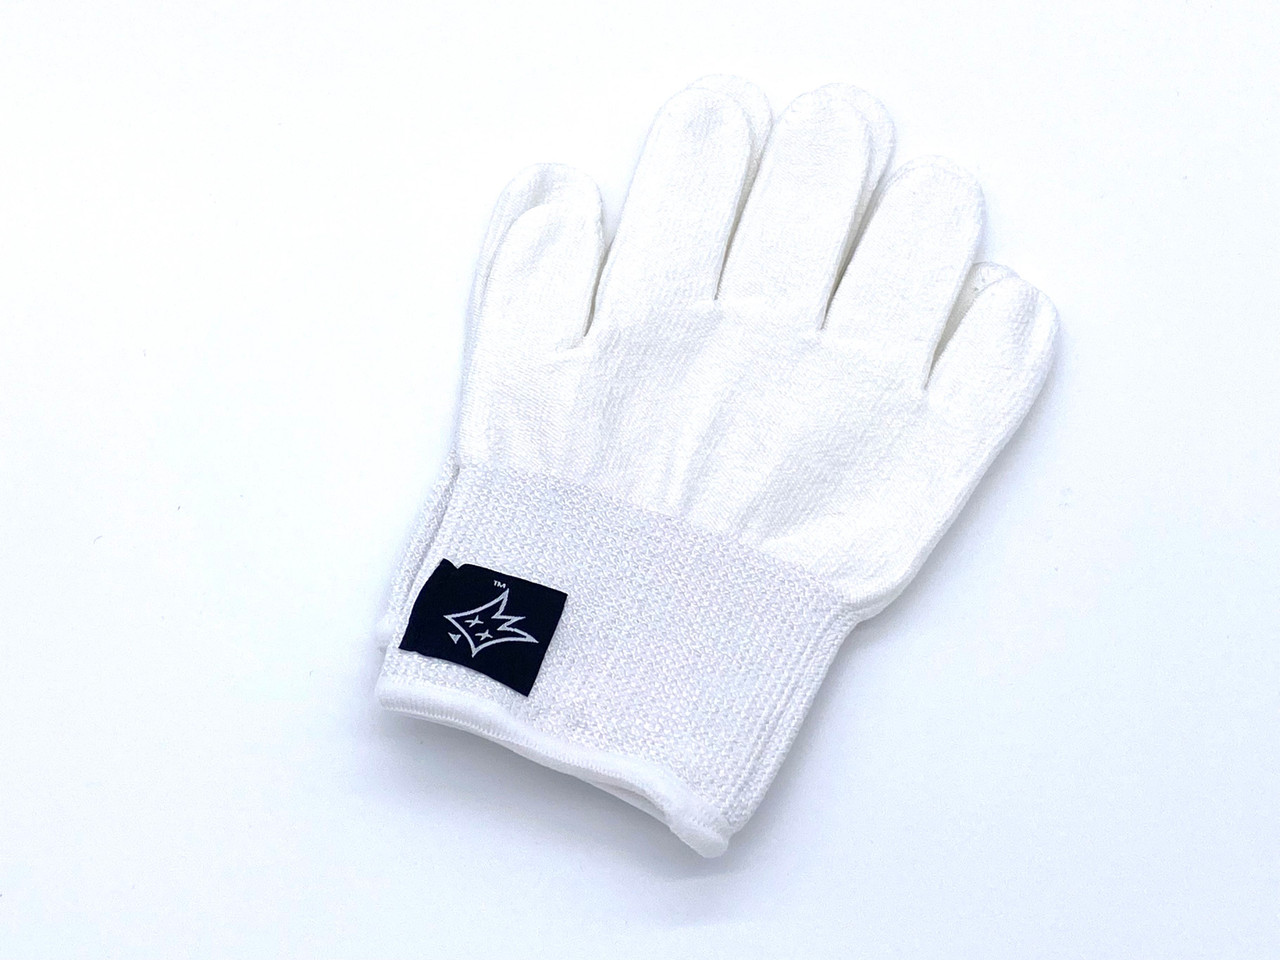 OFF-WRAP Glove -Silk Touch - Medium (pair)